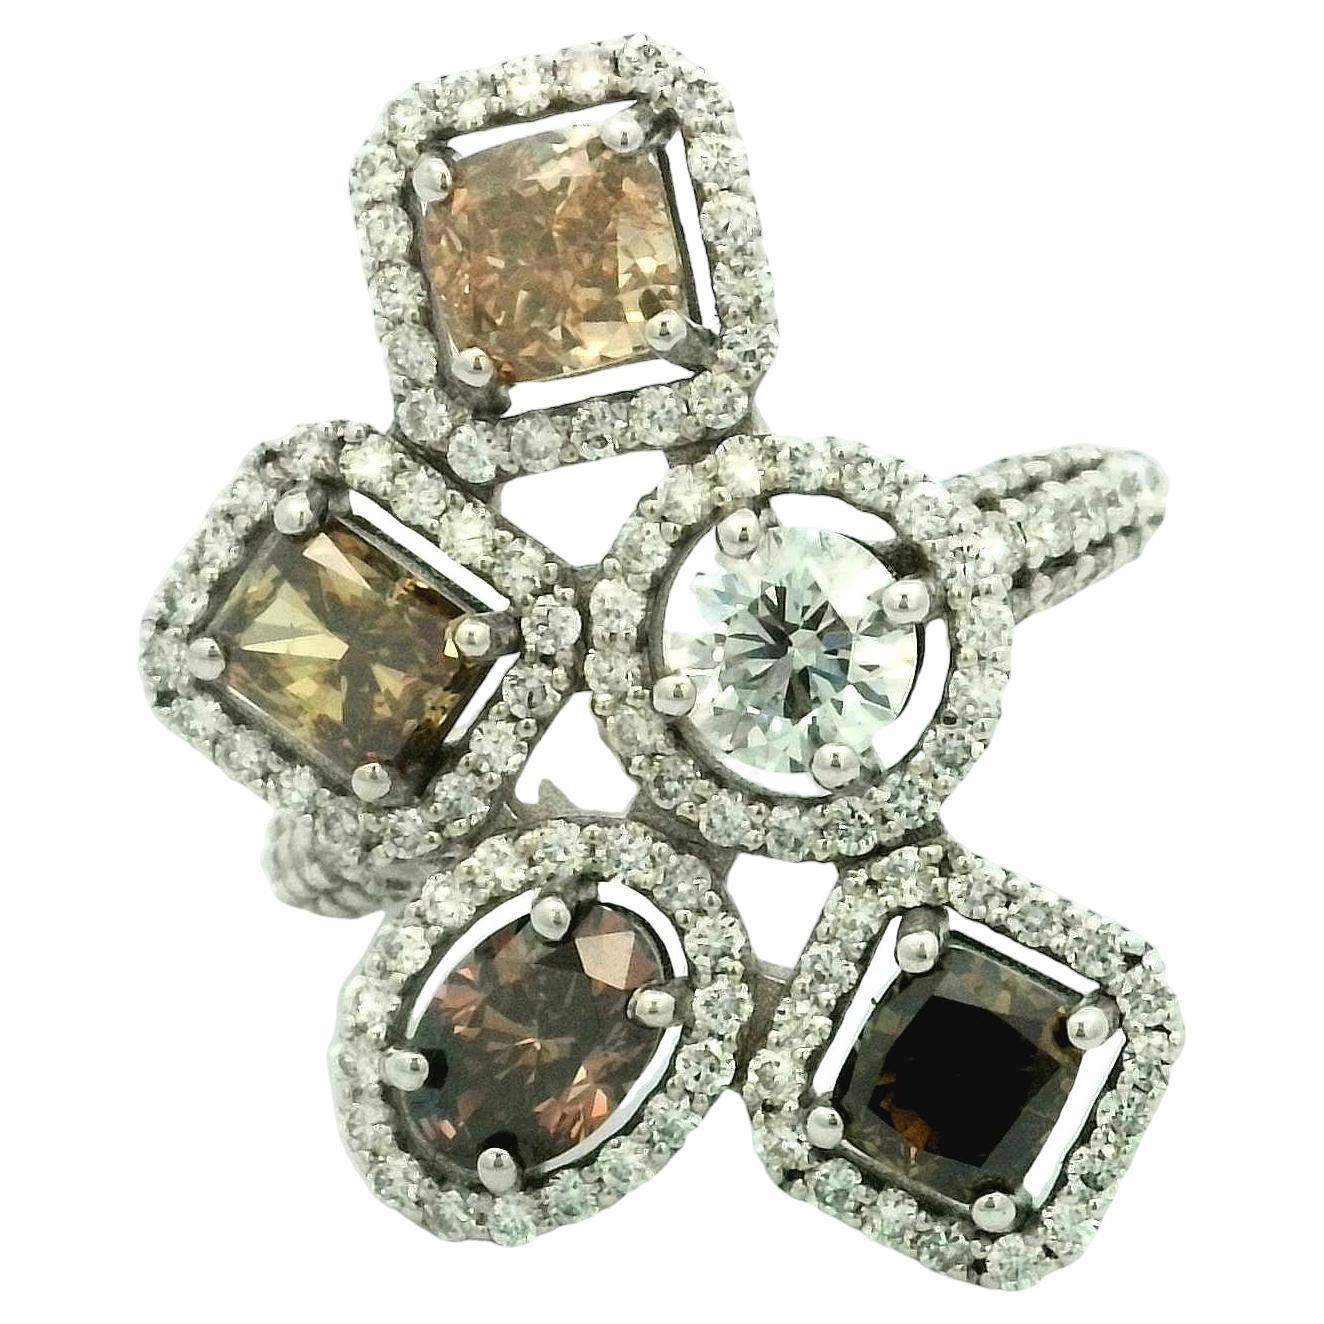 14k White Gold 3.61 carat Fancy Shape Diamond Encrusted Halo Ring (Size 7)